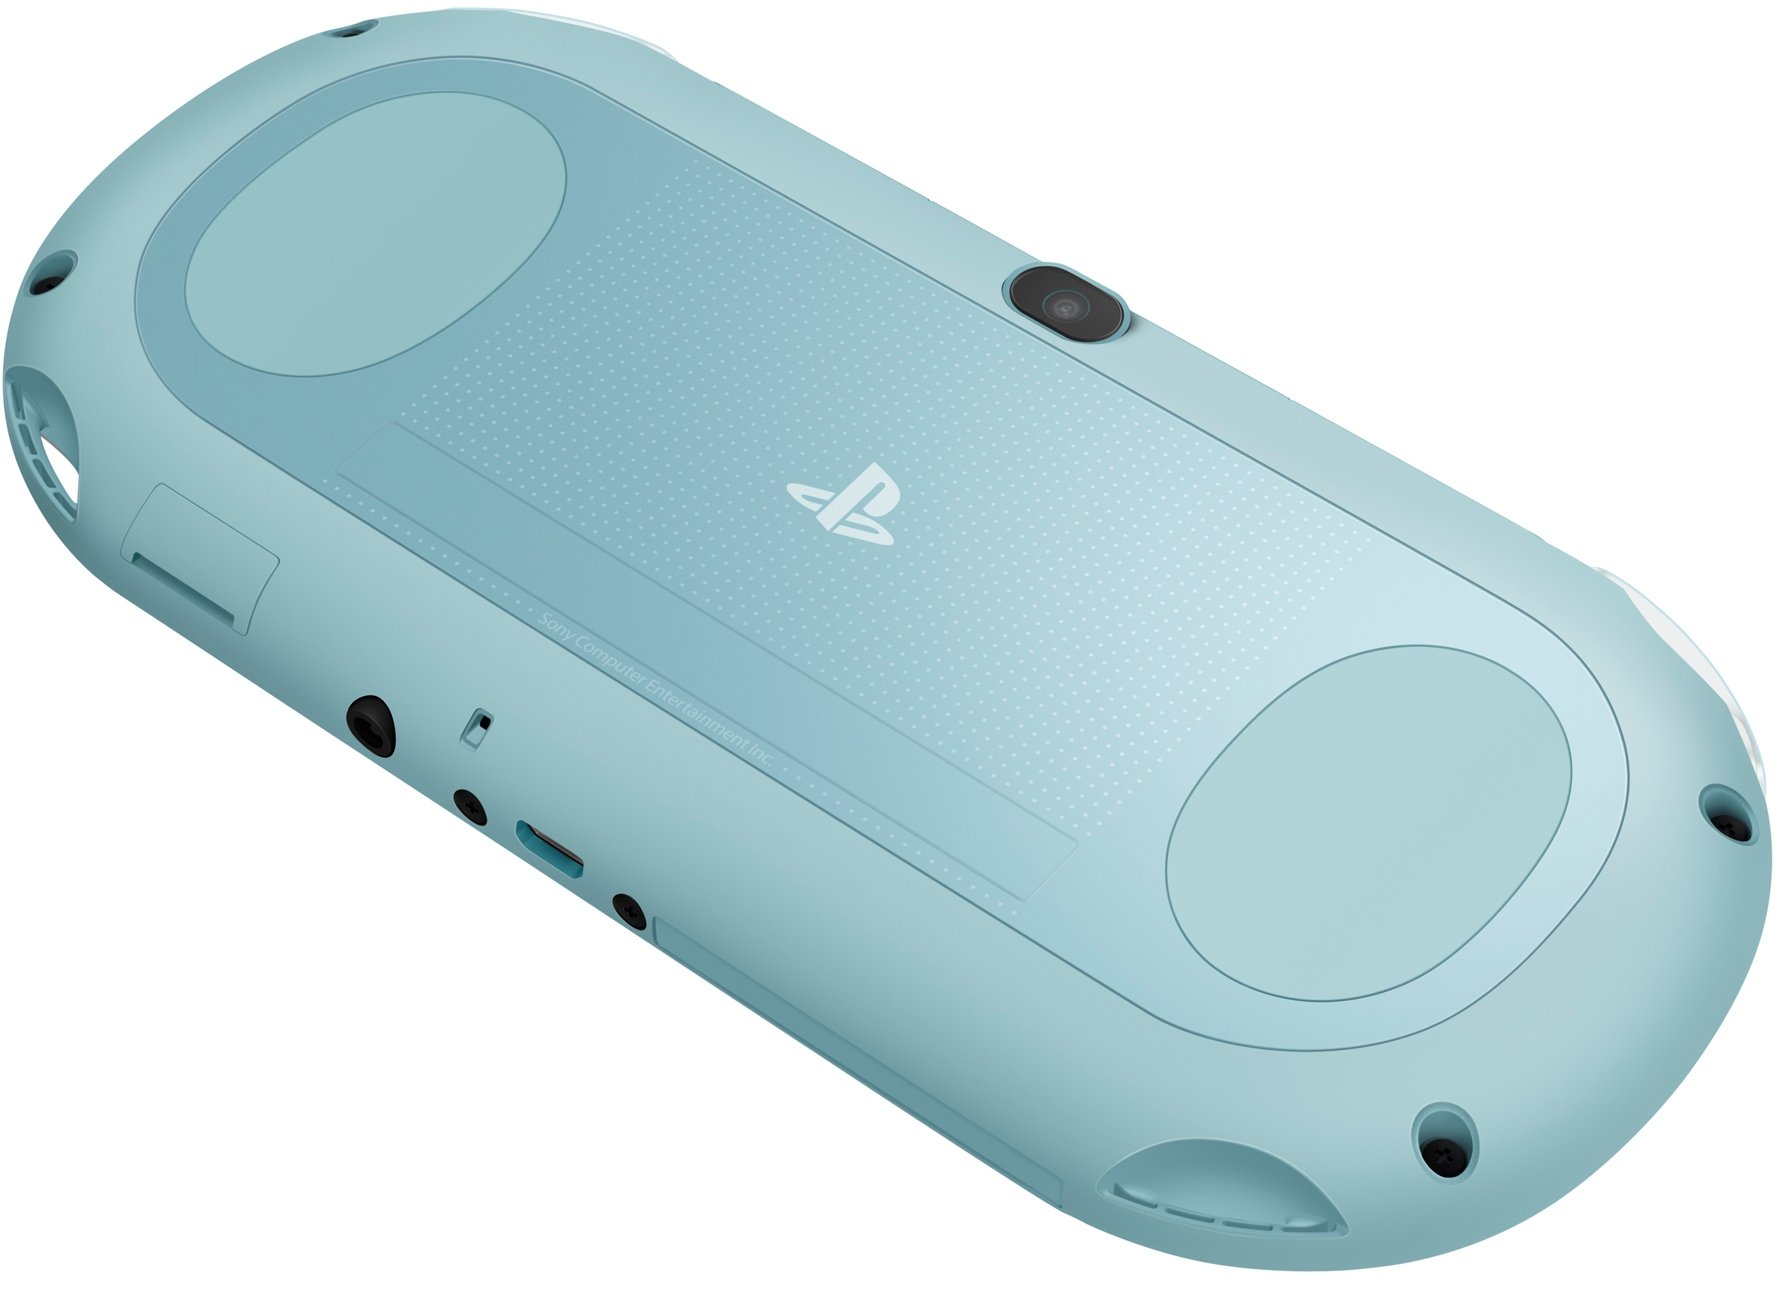 PlayStation Vita Wi-Fi Light blue/White PCH-2000ZA14(Japan Import)